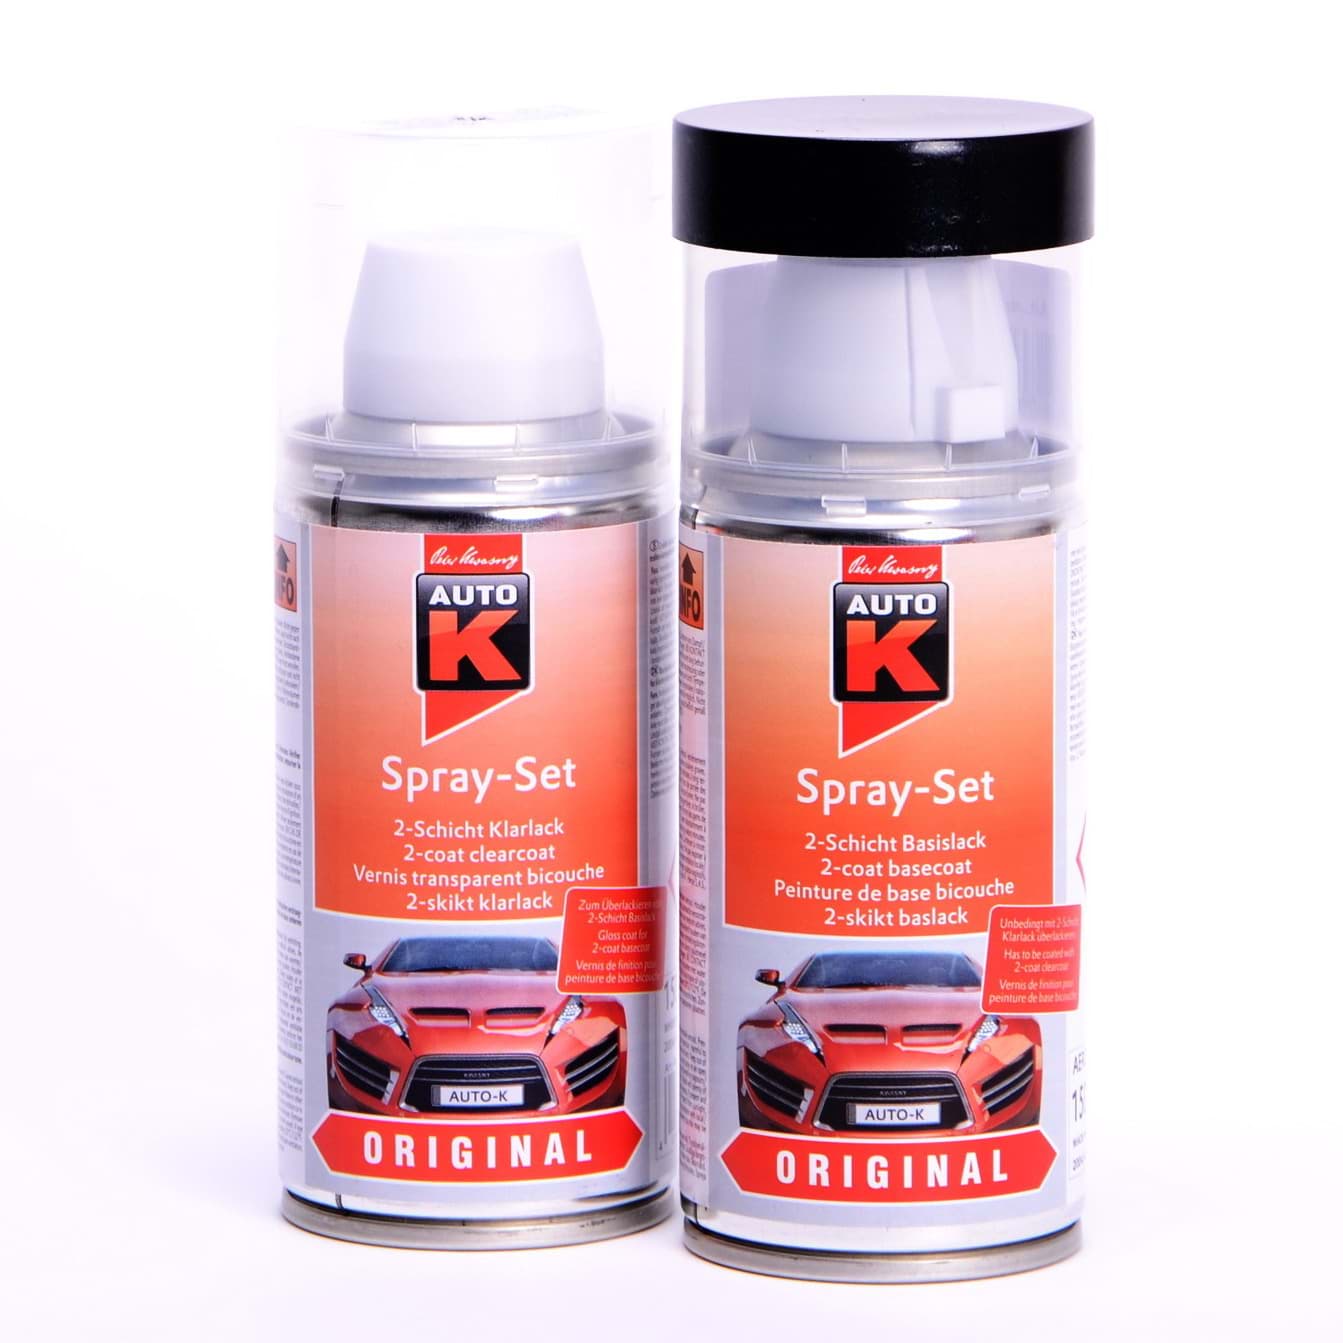 Auto-K Spray-Set Autolack für Opel 146 Olivgrau met 21426 resmi